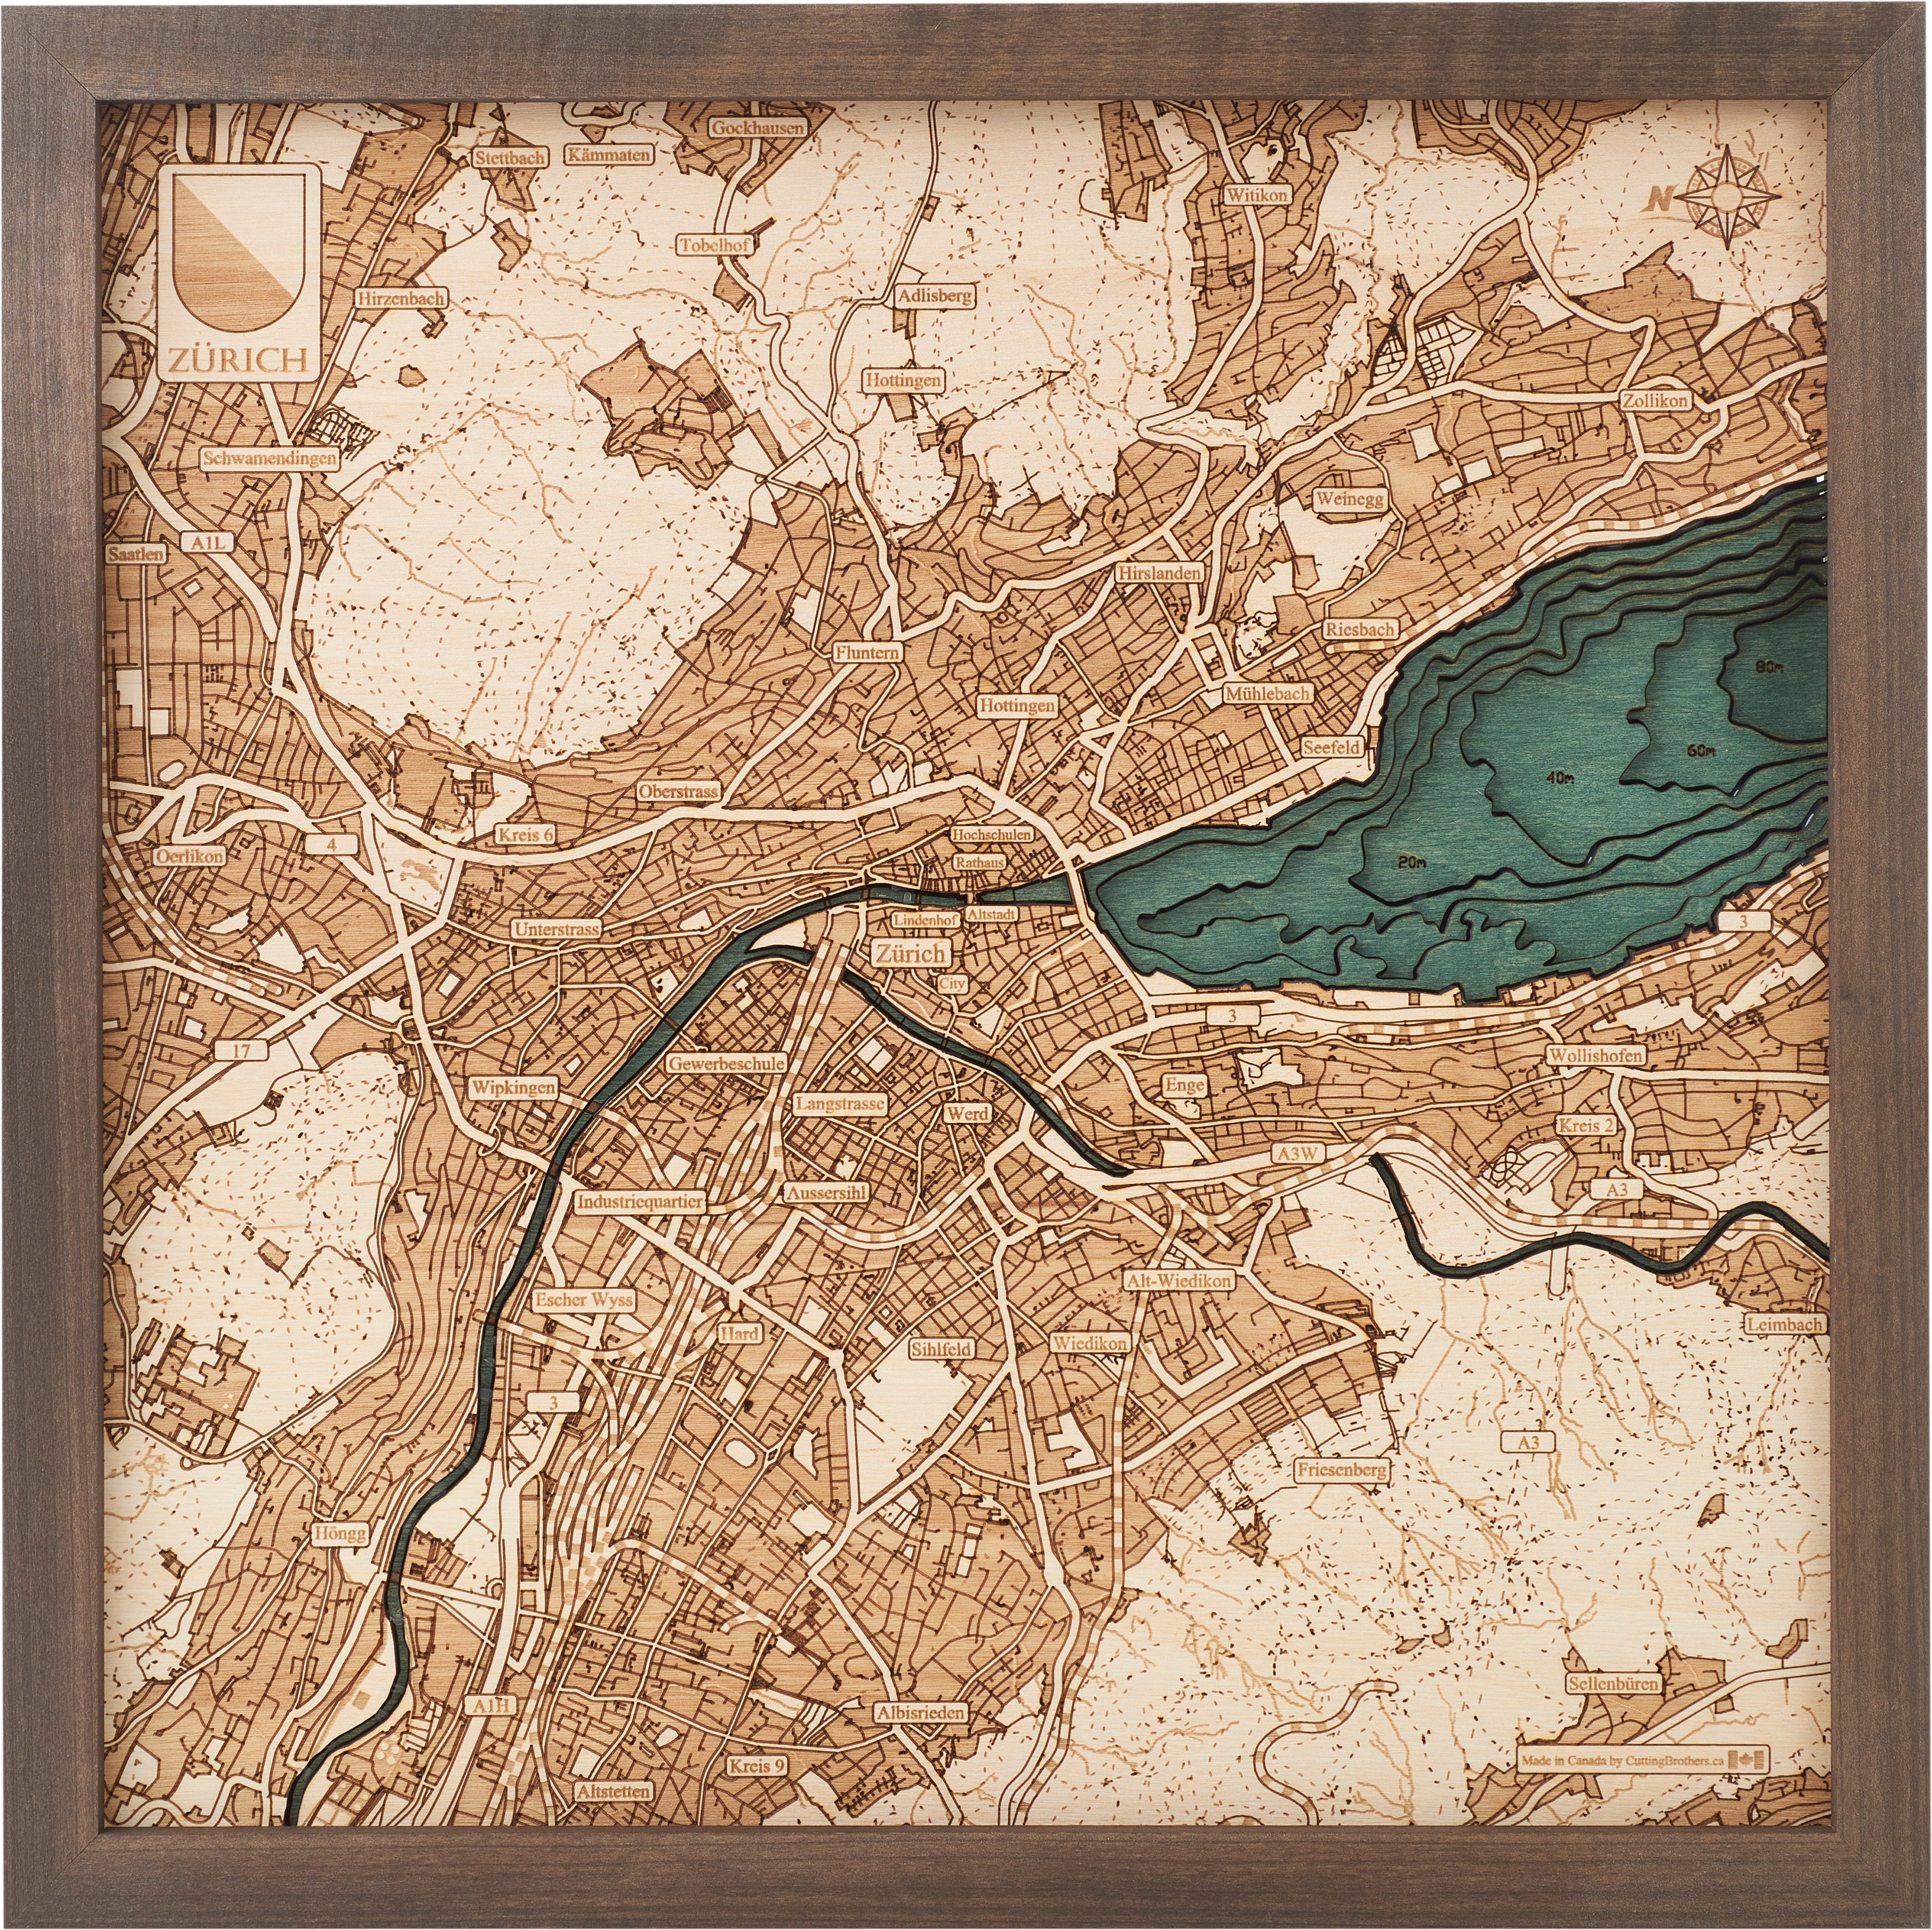 ZURICH 3D wooden wall map - version S